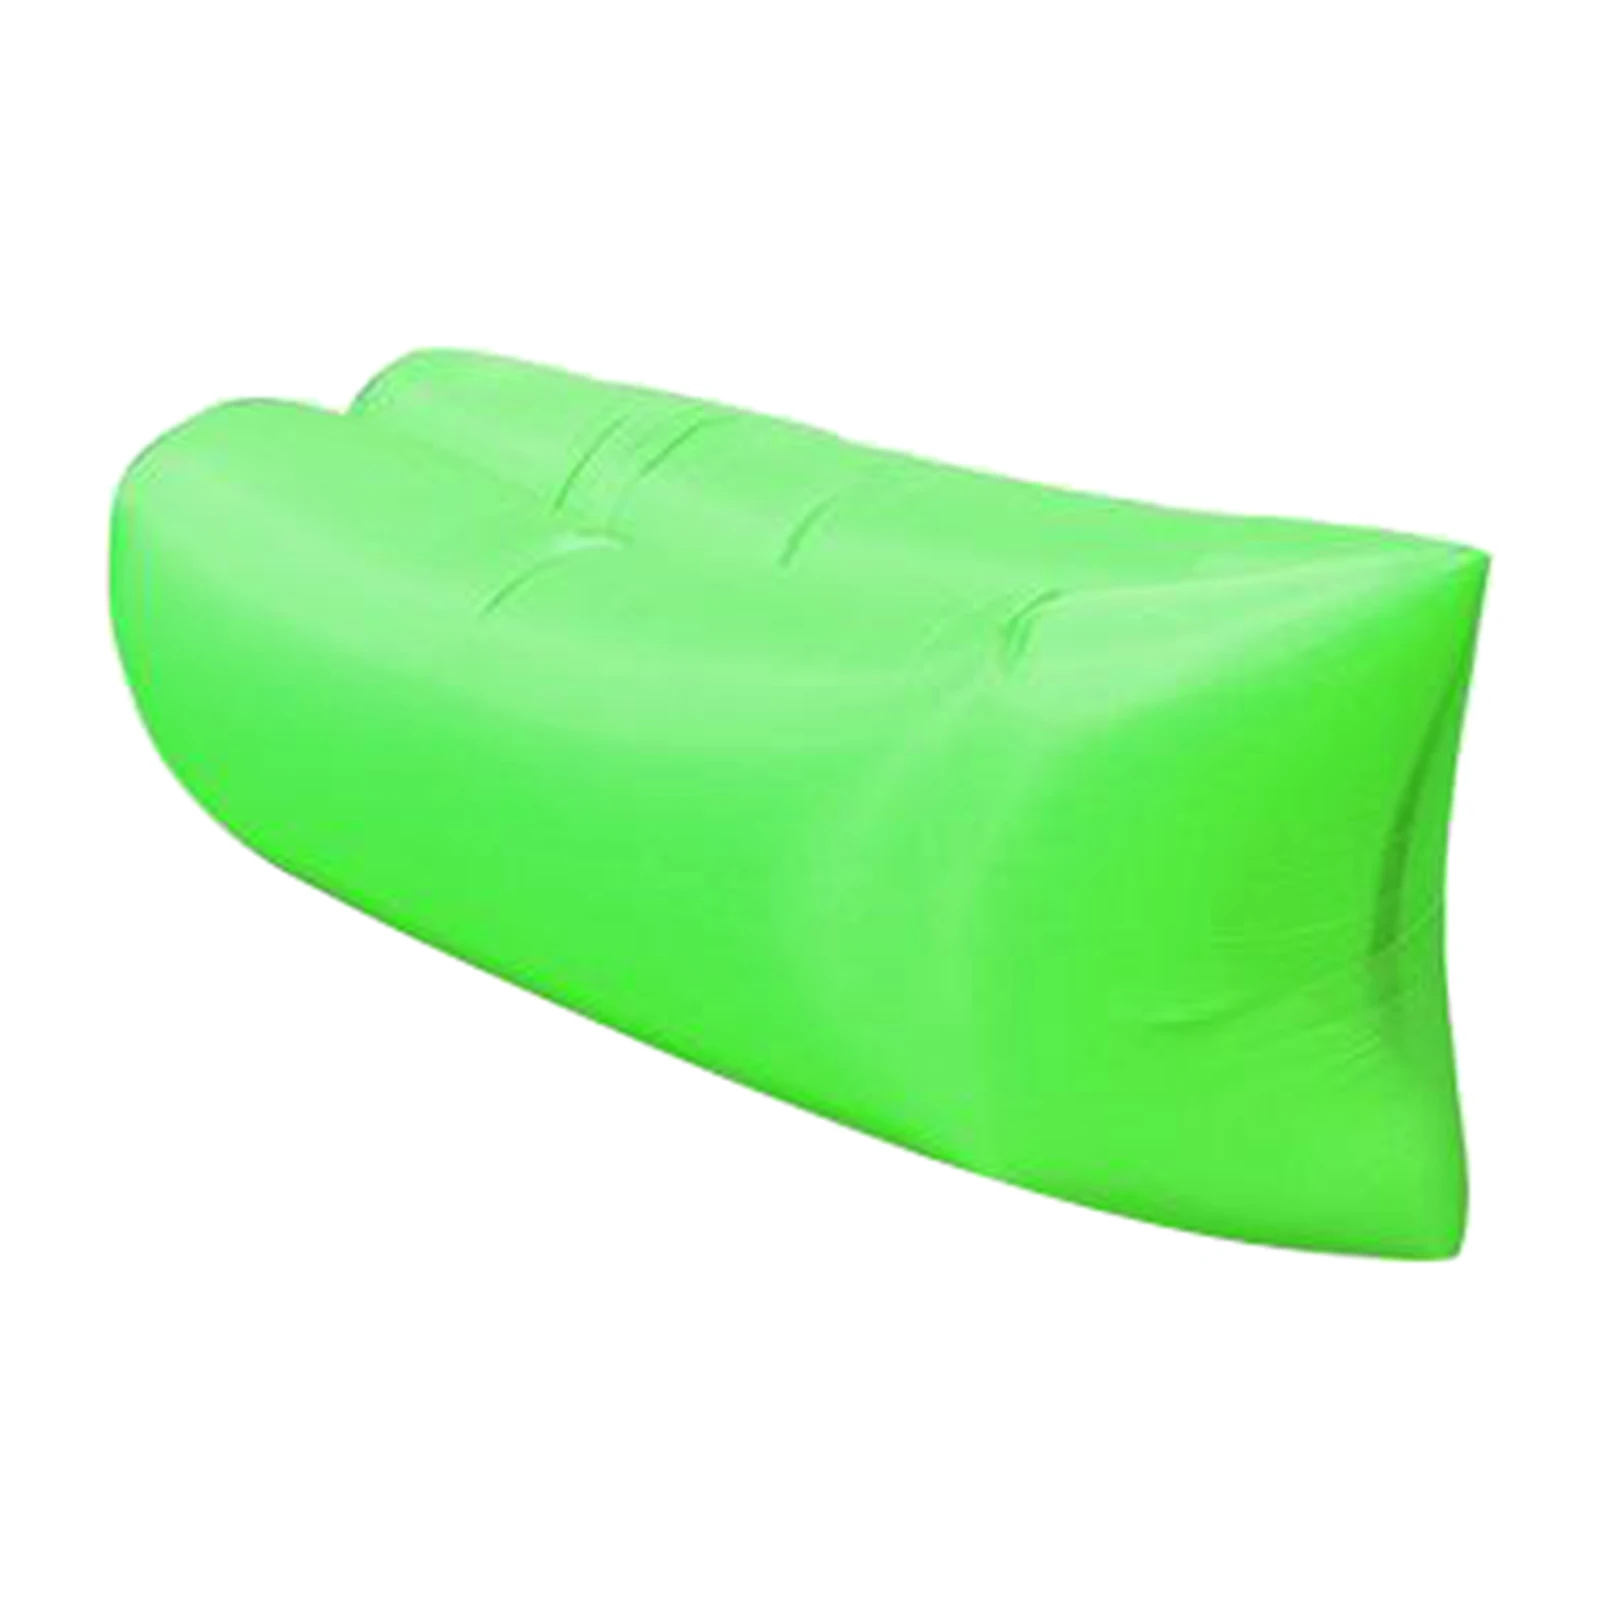 Adult Kid Outdoor Inflatable Sofa Air Bed Lounger Sleeping Bag Camping Beach Bag